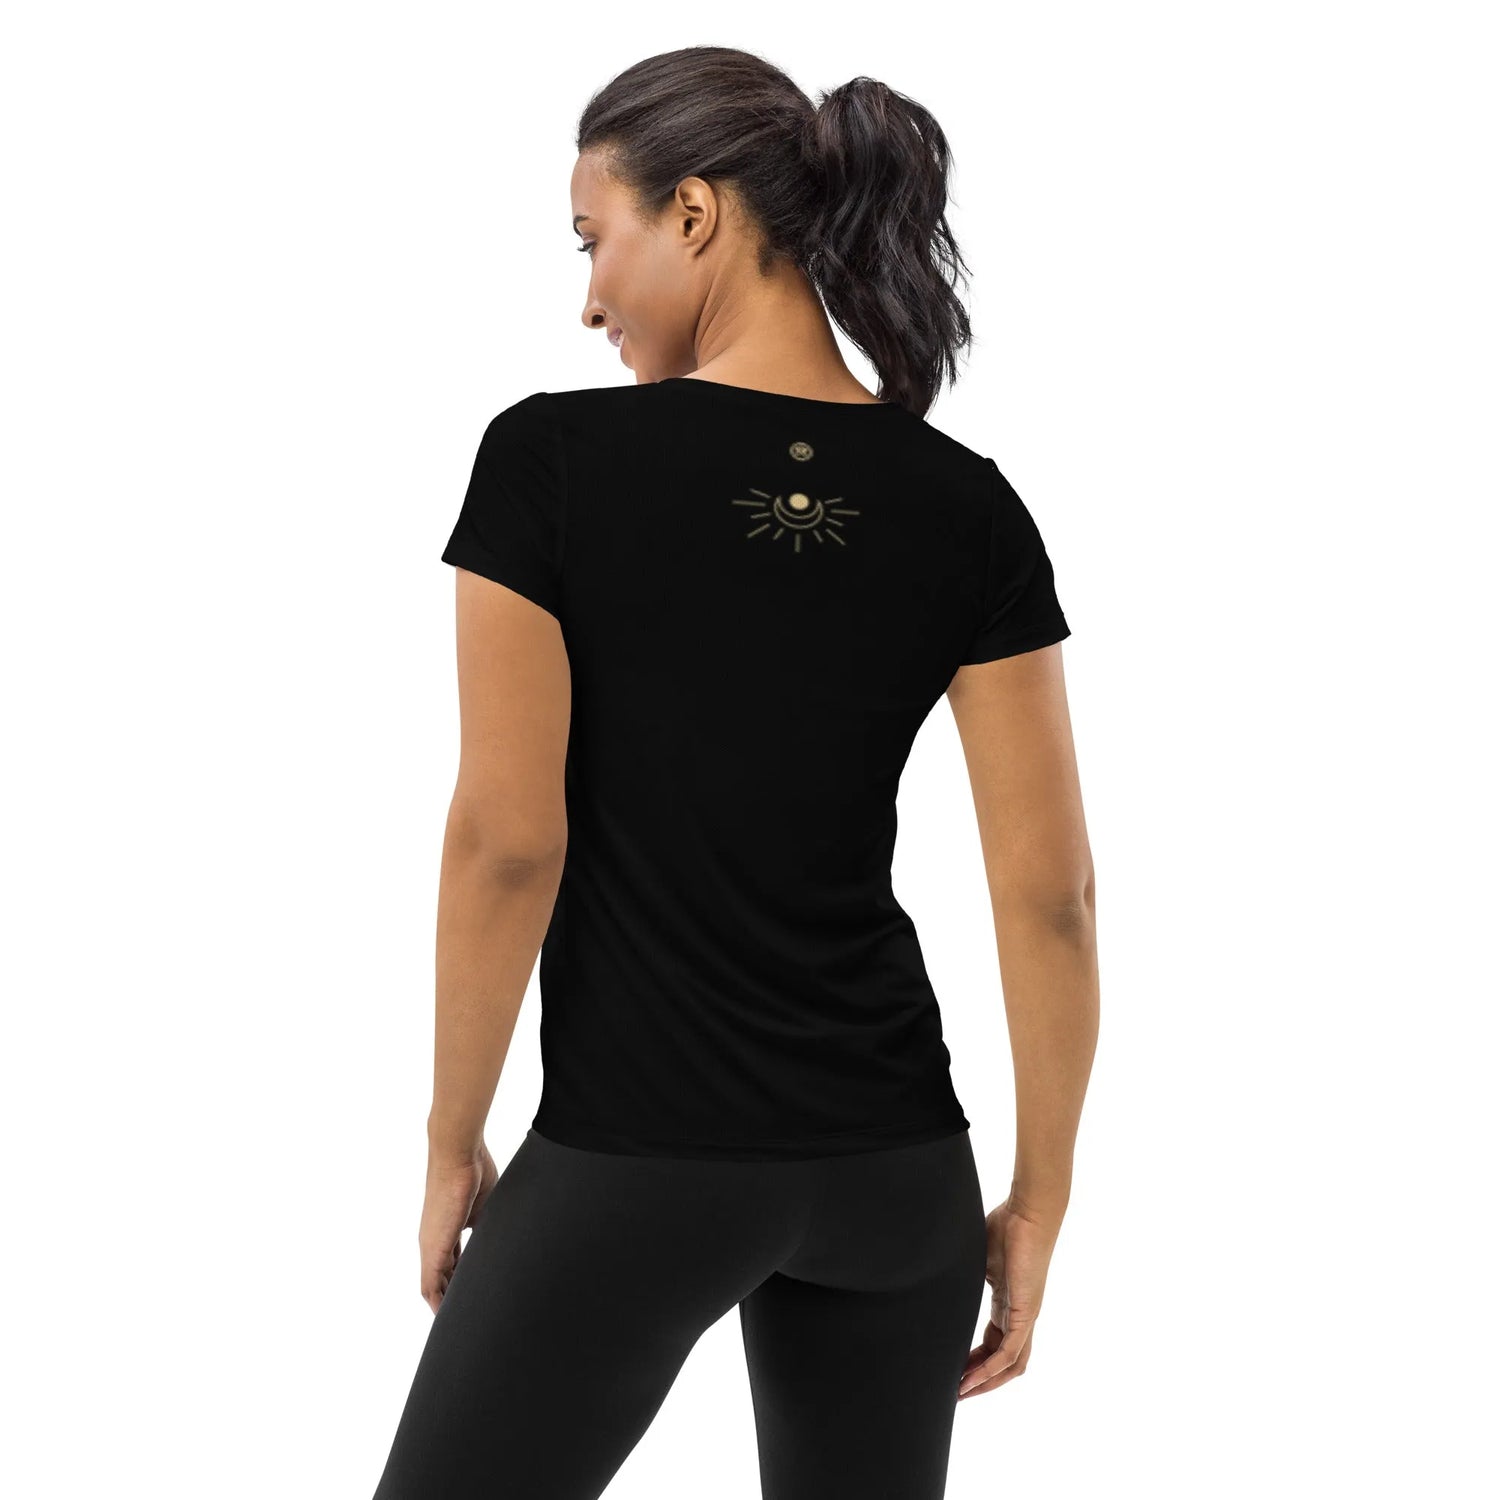 Damen Sport-T-Shirt MAOB - MOONLIGHT 24